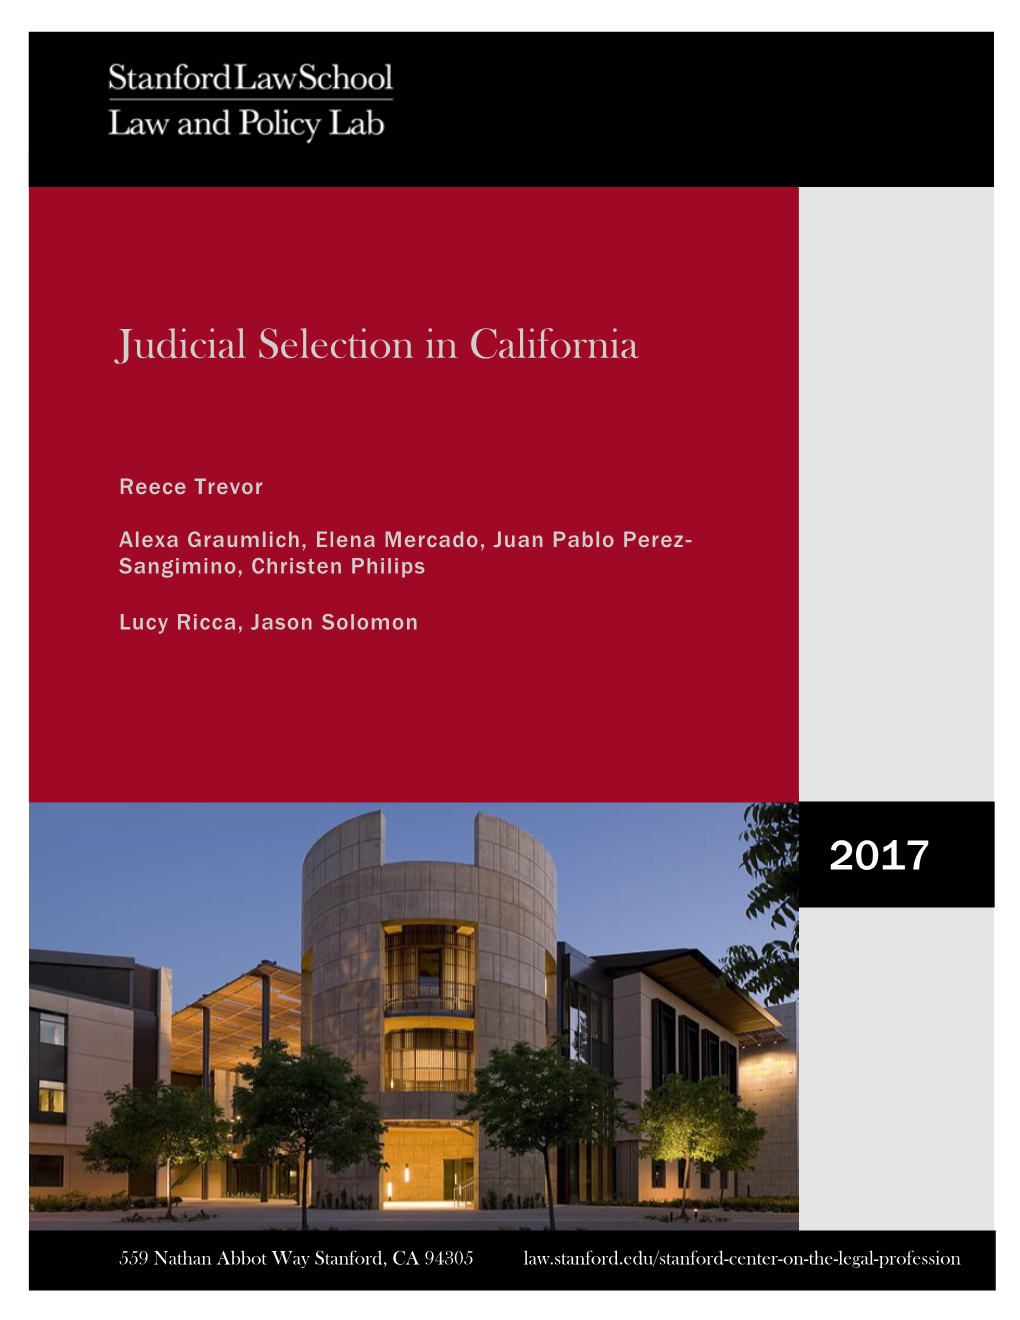 2017 Judicial Selection in California